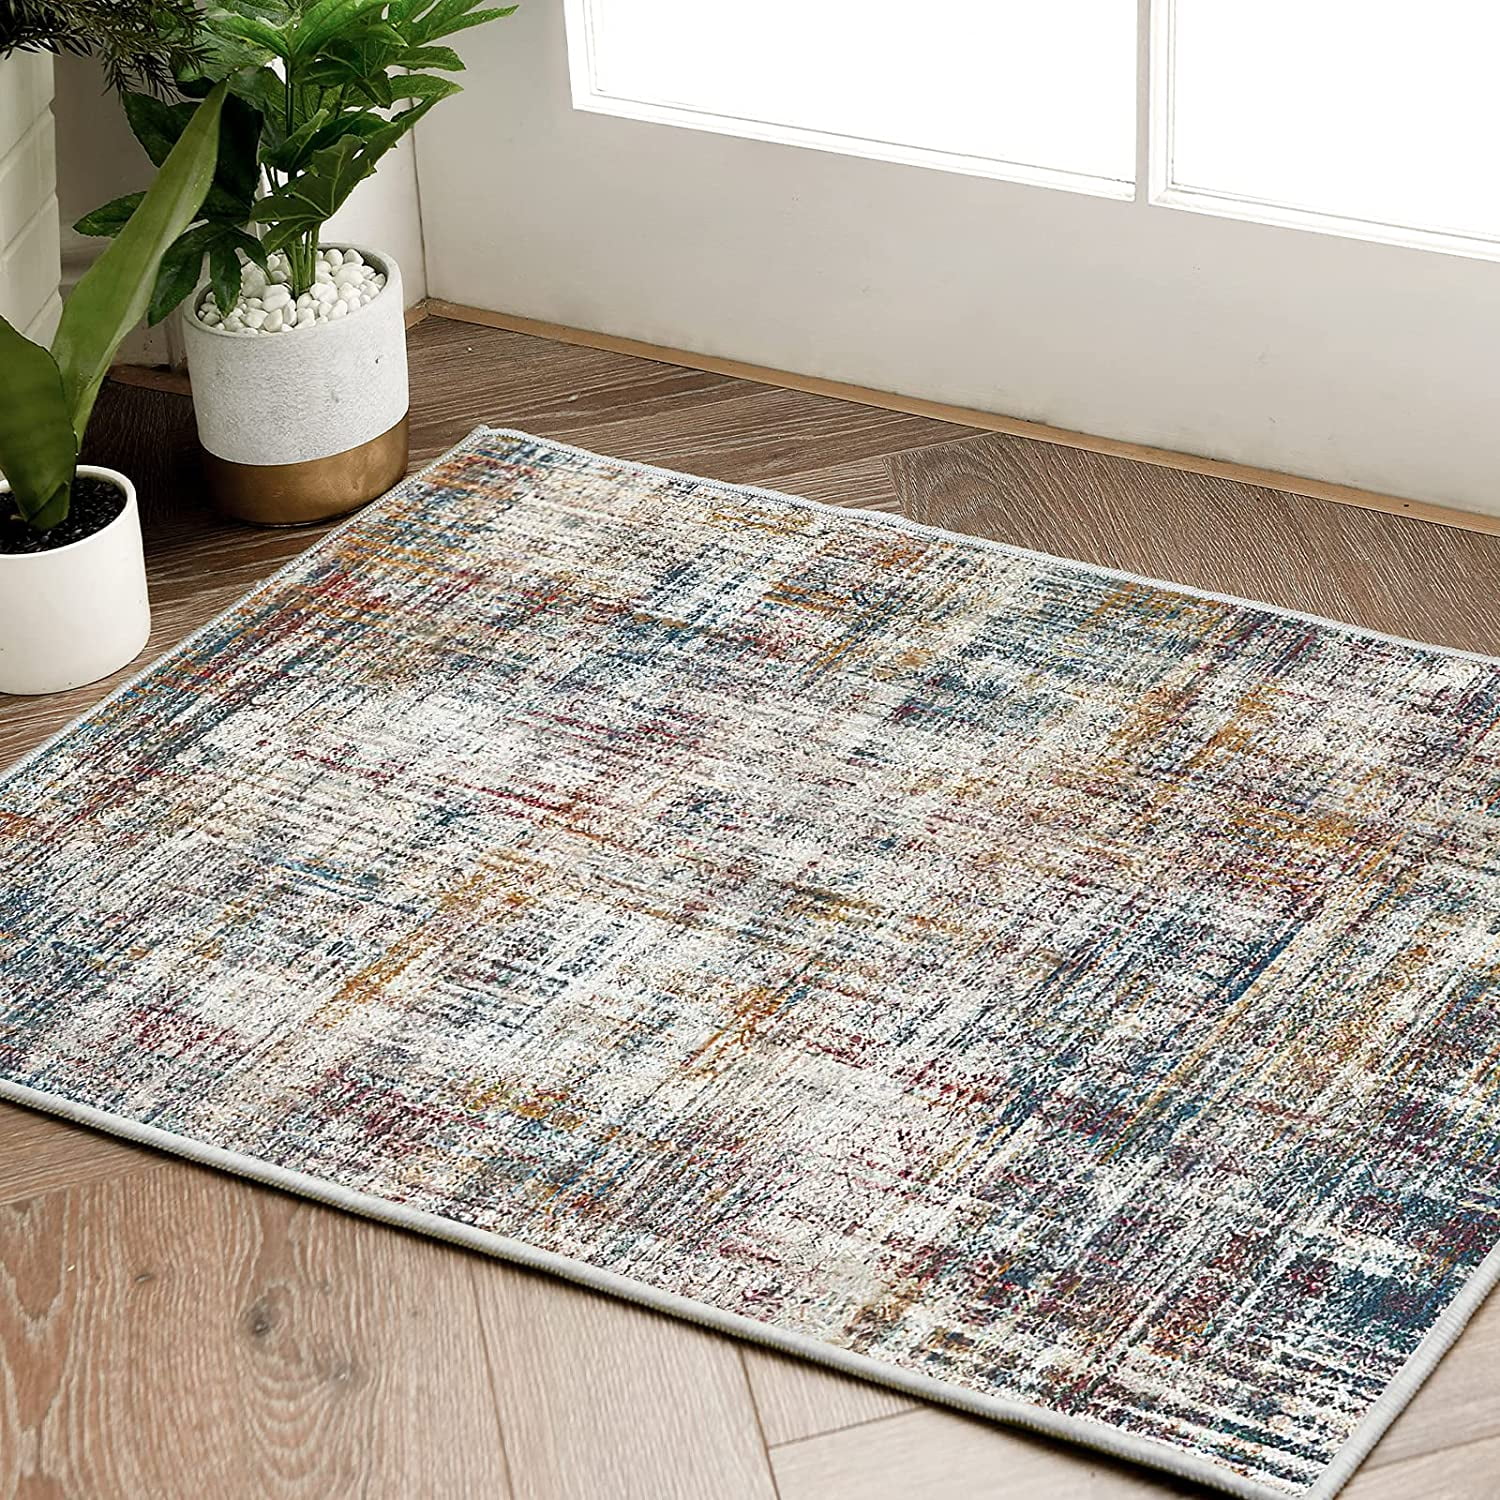 Details about   Vintage Jute Wool Mat Carpet Hand Woven Kilim Area Rug 2x3 Living Room Floor Rug 